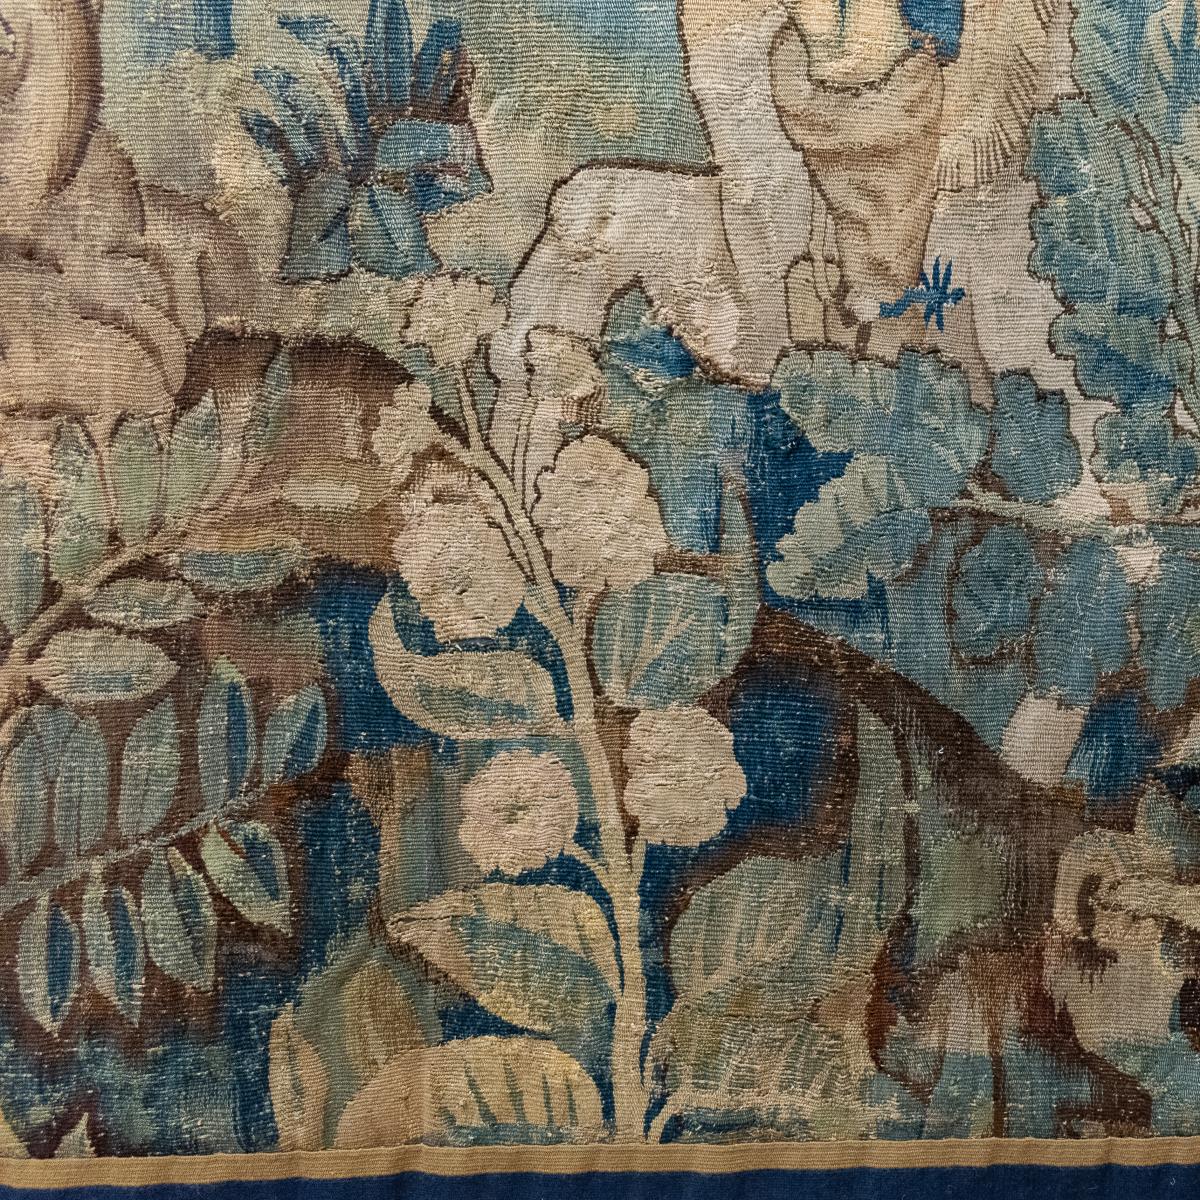 A 17th century tapestry panel, Flemish, circa 1600-20